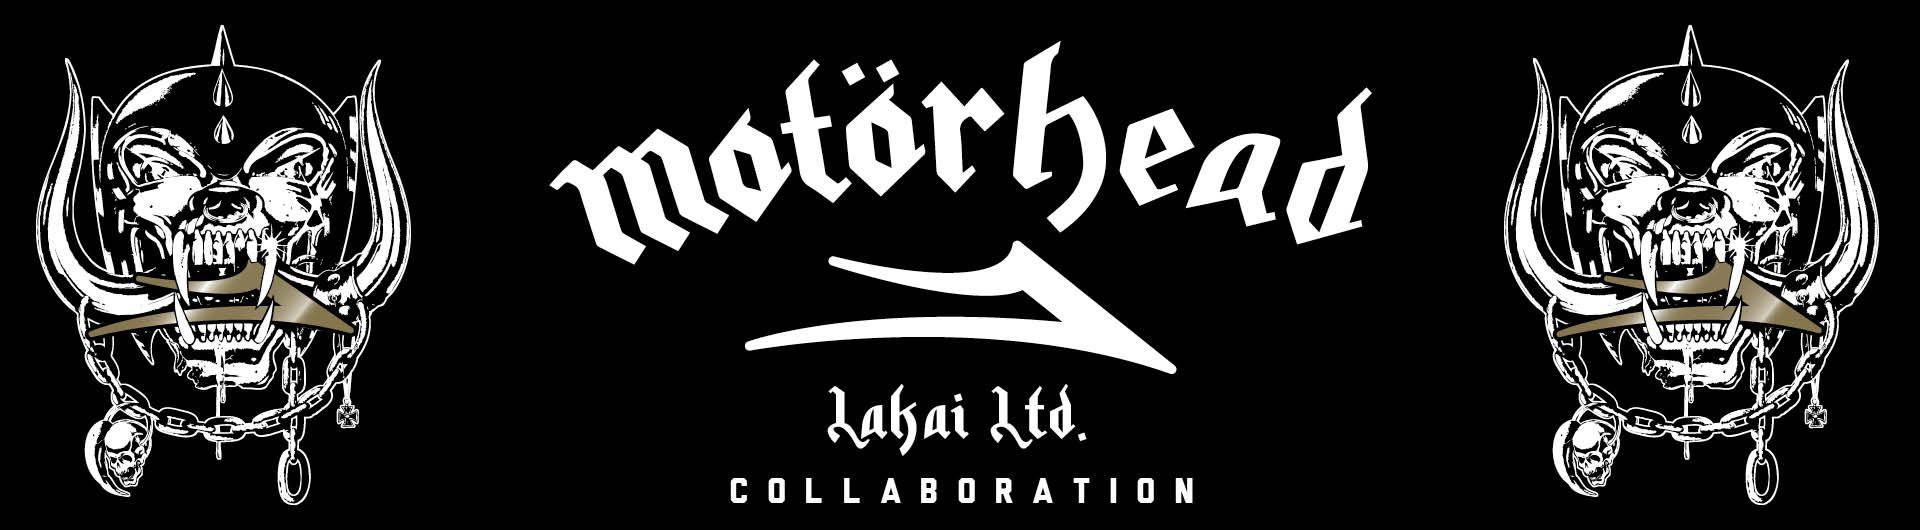 Lakai Skateboard Logo - Shop the Lakai x Motörhead Collaboration - Lakai.com